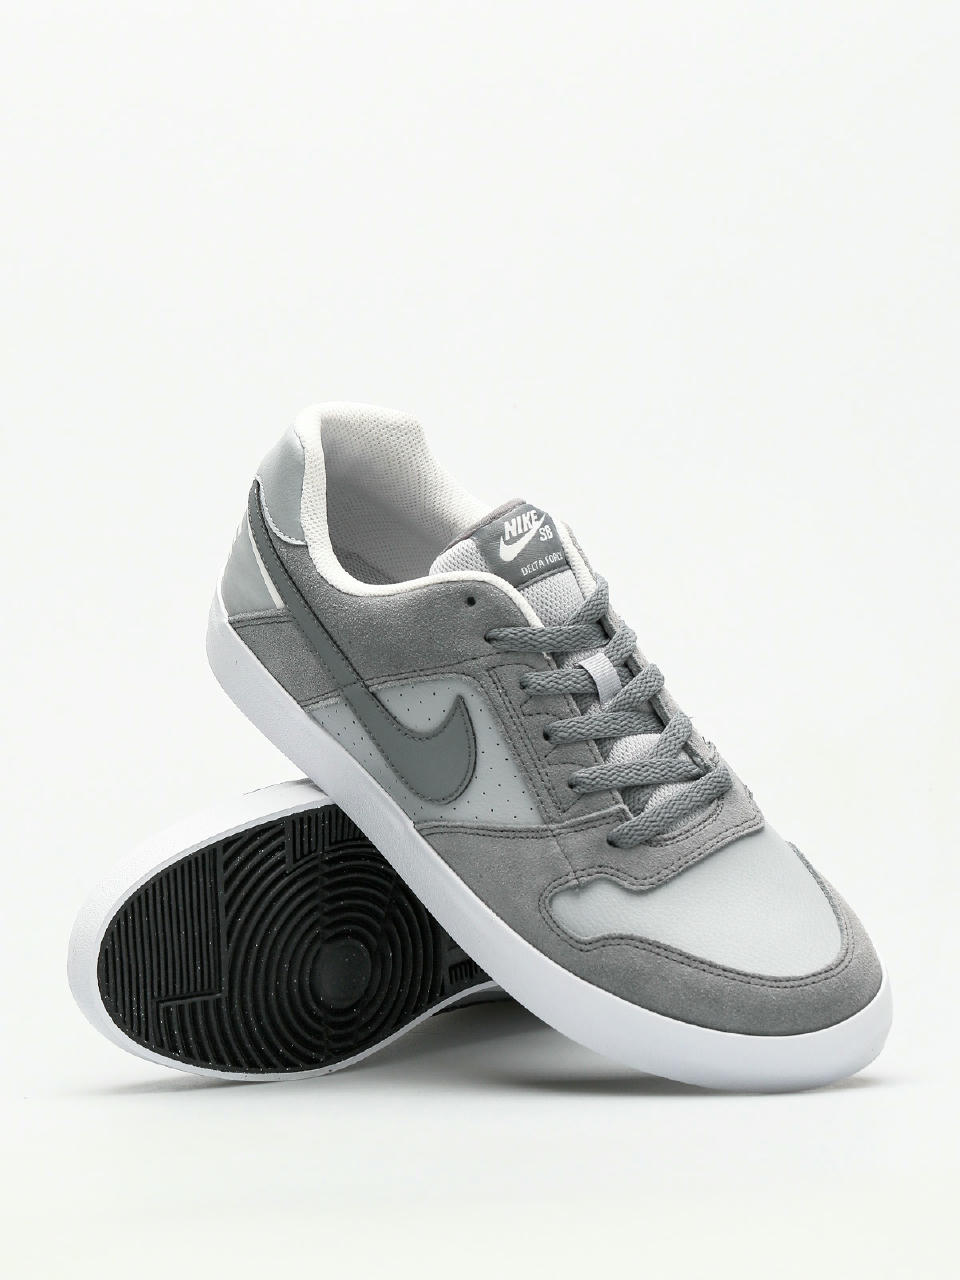 Dental Lamer Separar Nike SB Shoes Sb Delta Force Vulc (cool grey/cool grey wolf grey white)